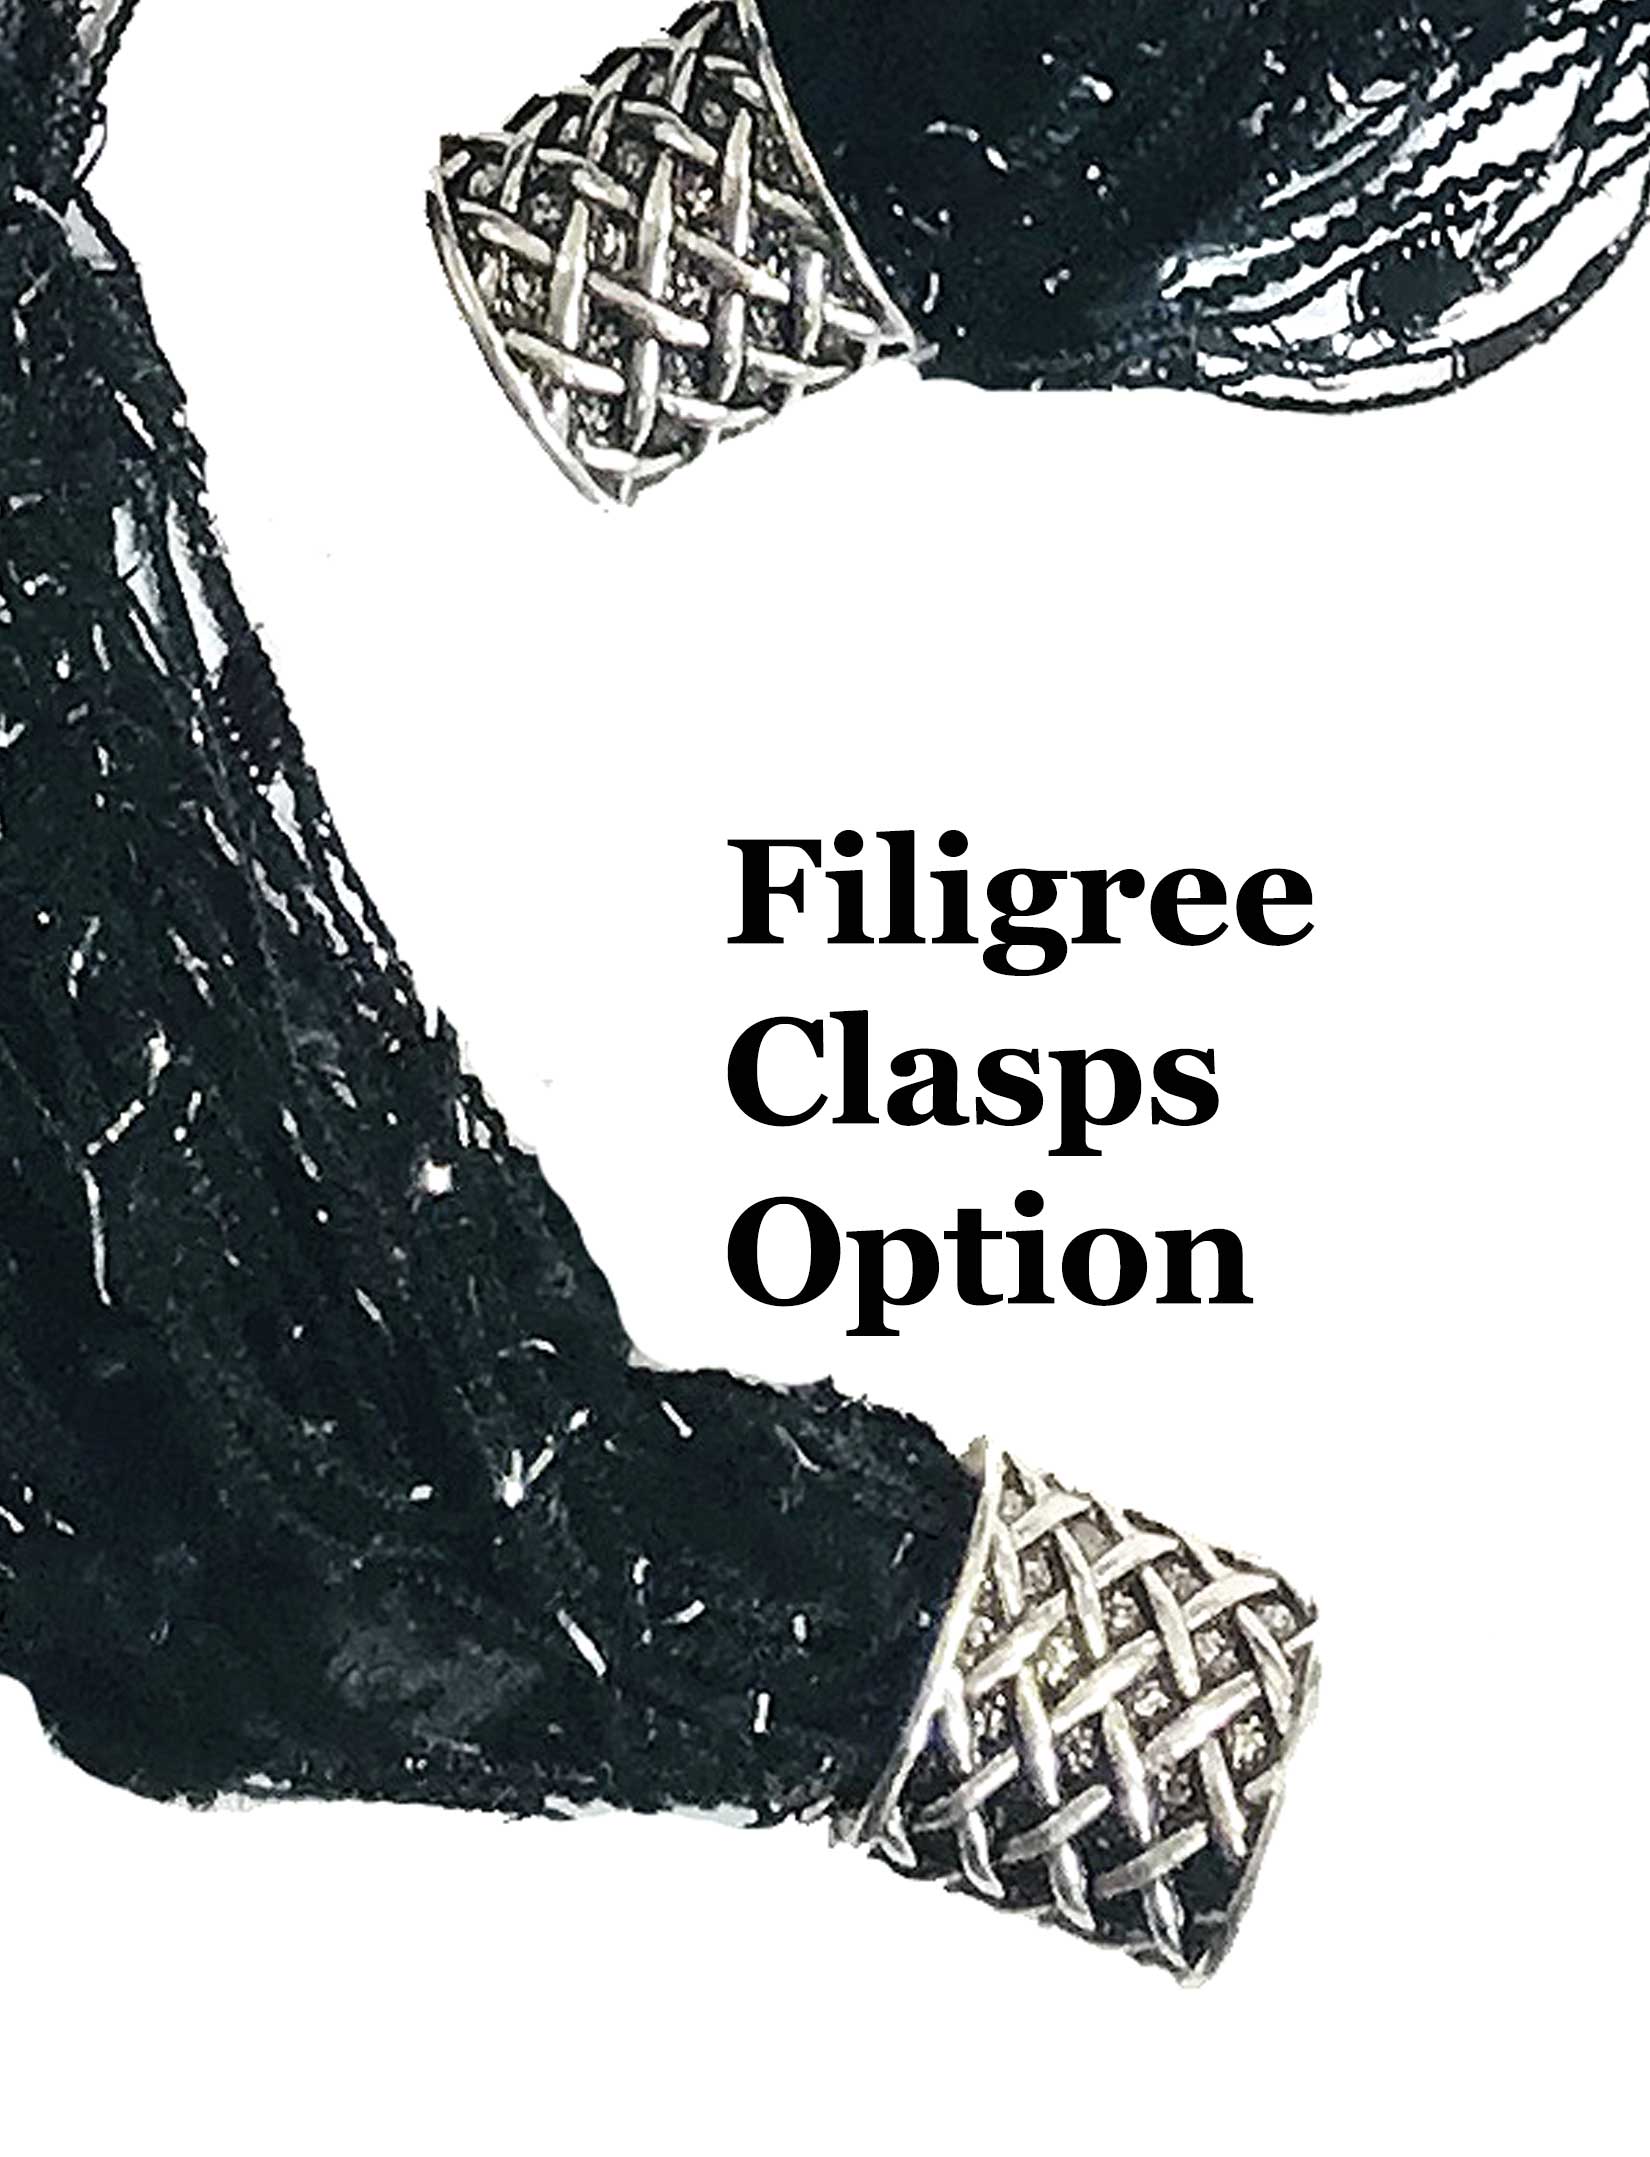 wholesale Filigree Clasps